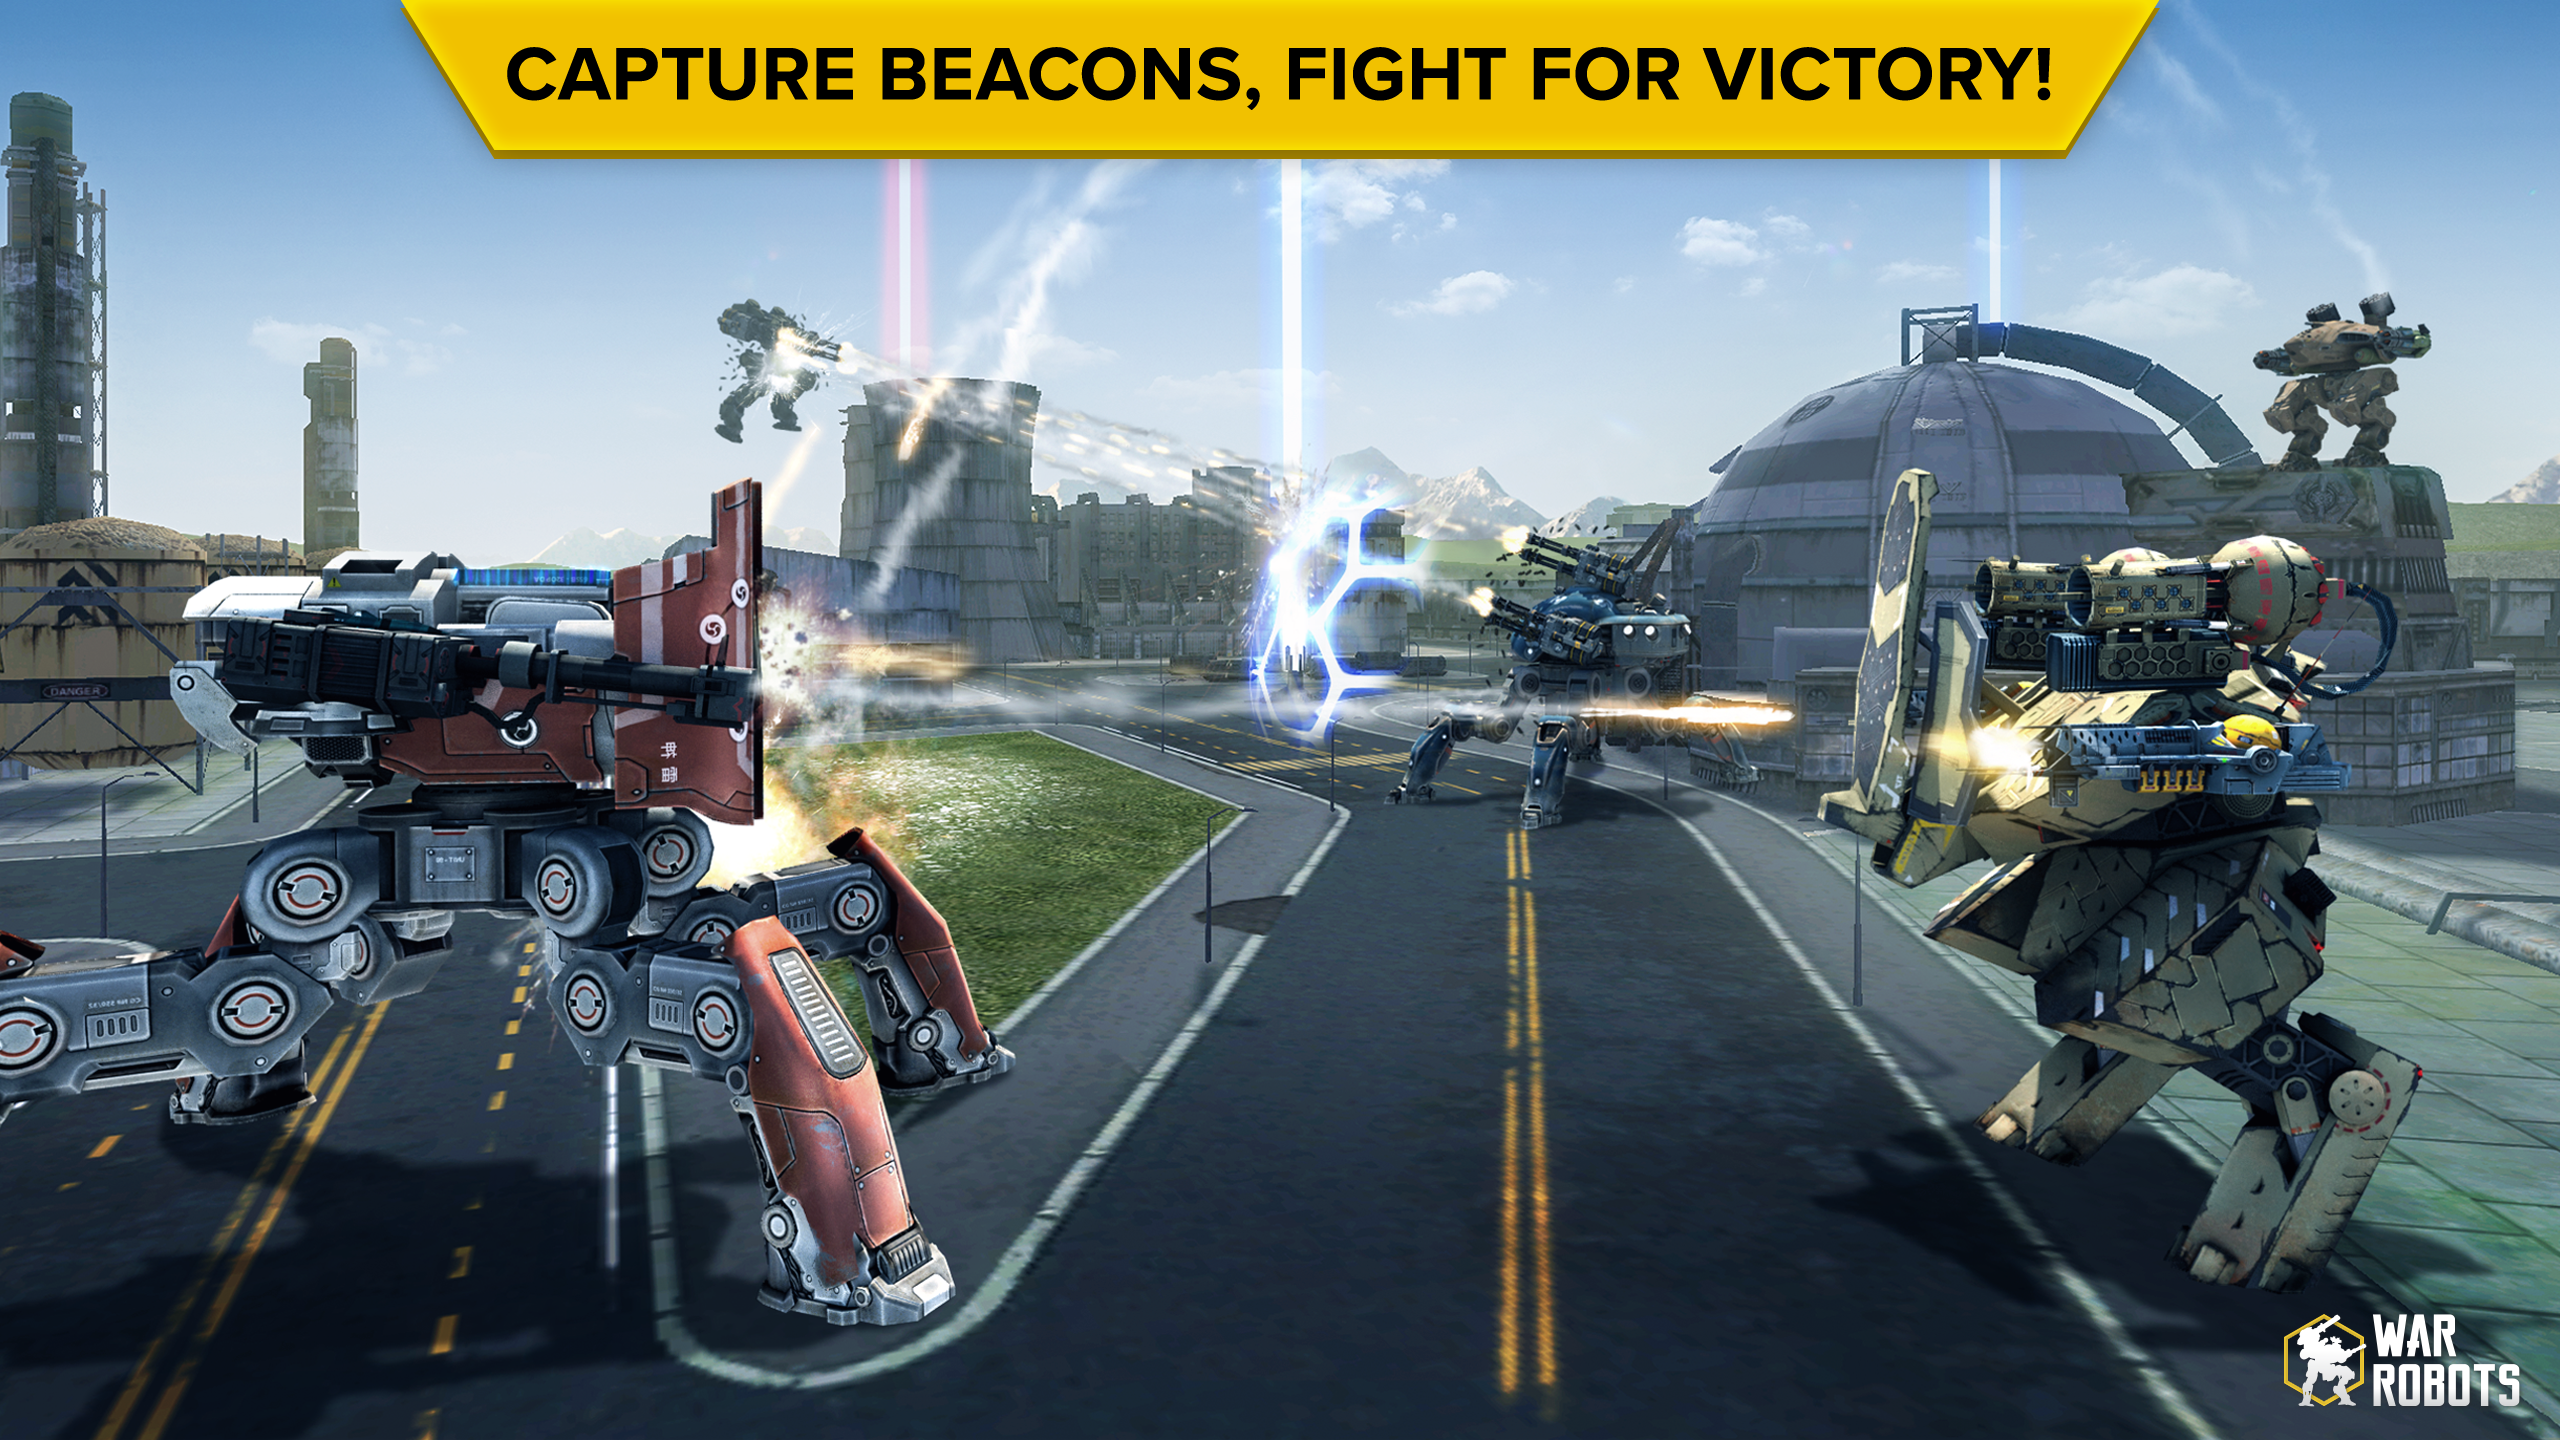 War Robots. 6v6 Tactical Multiplayer Battles for Android ... - 